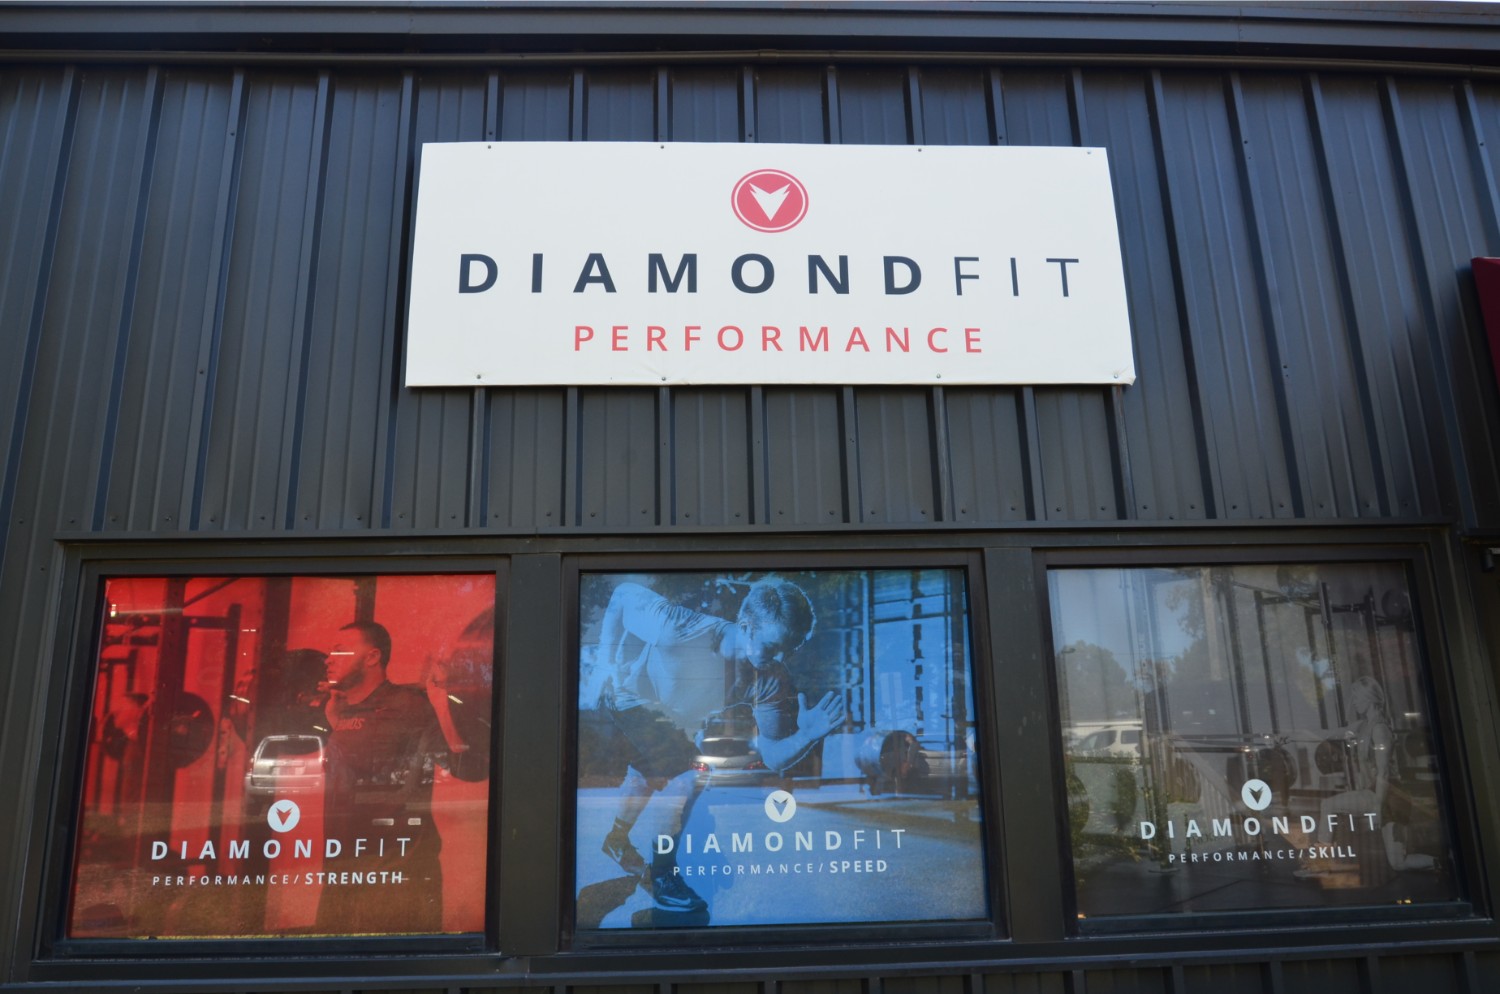 diamondfit performance logo